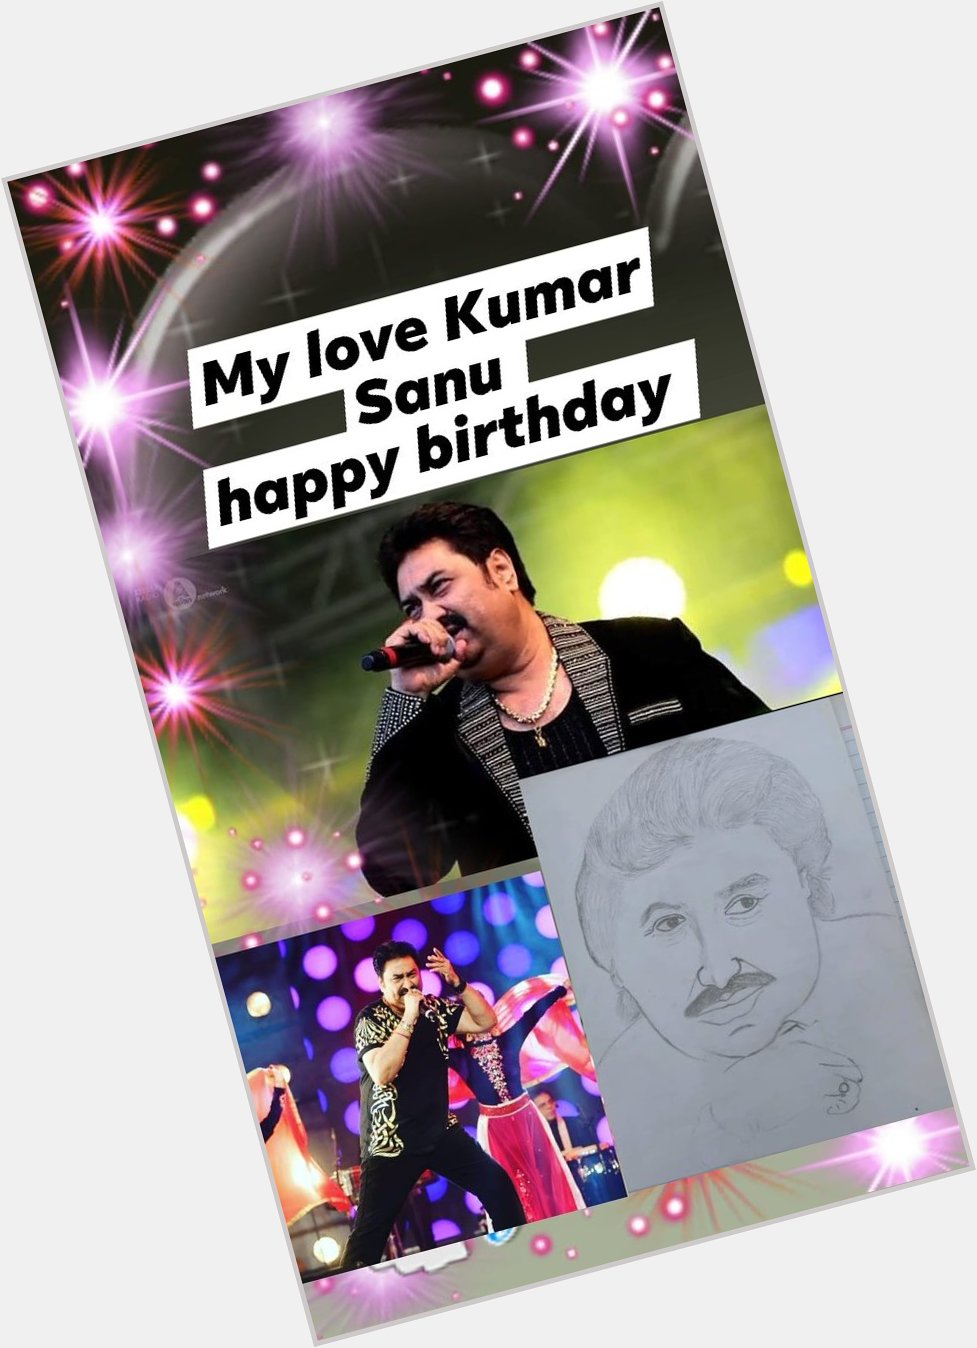  My love Kumar Sanu wish you happy birthday        